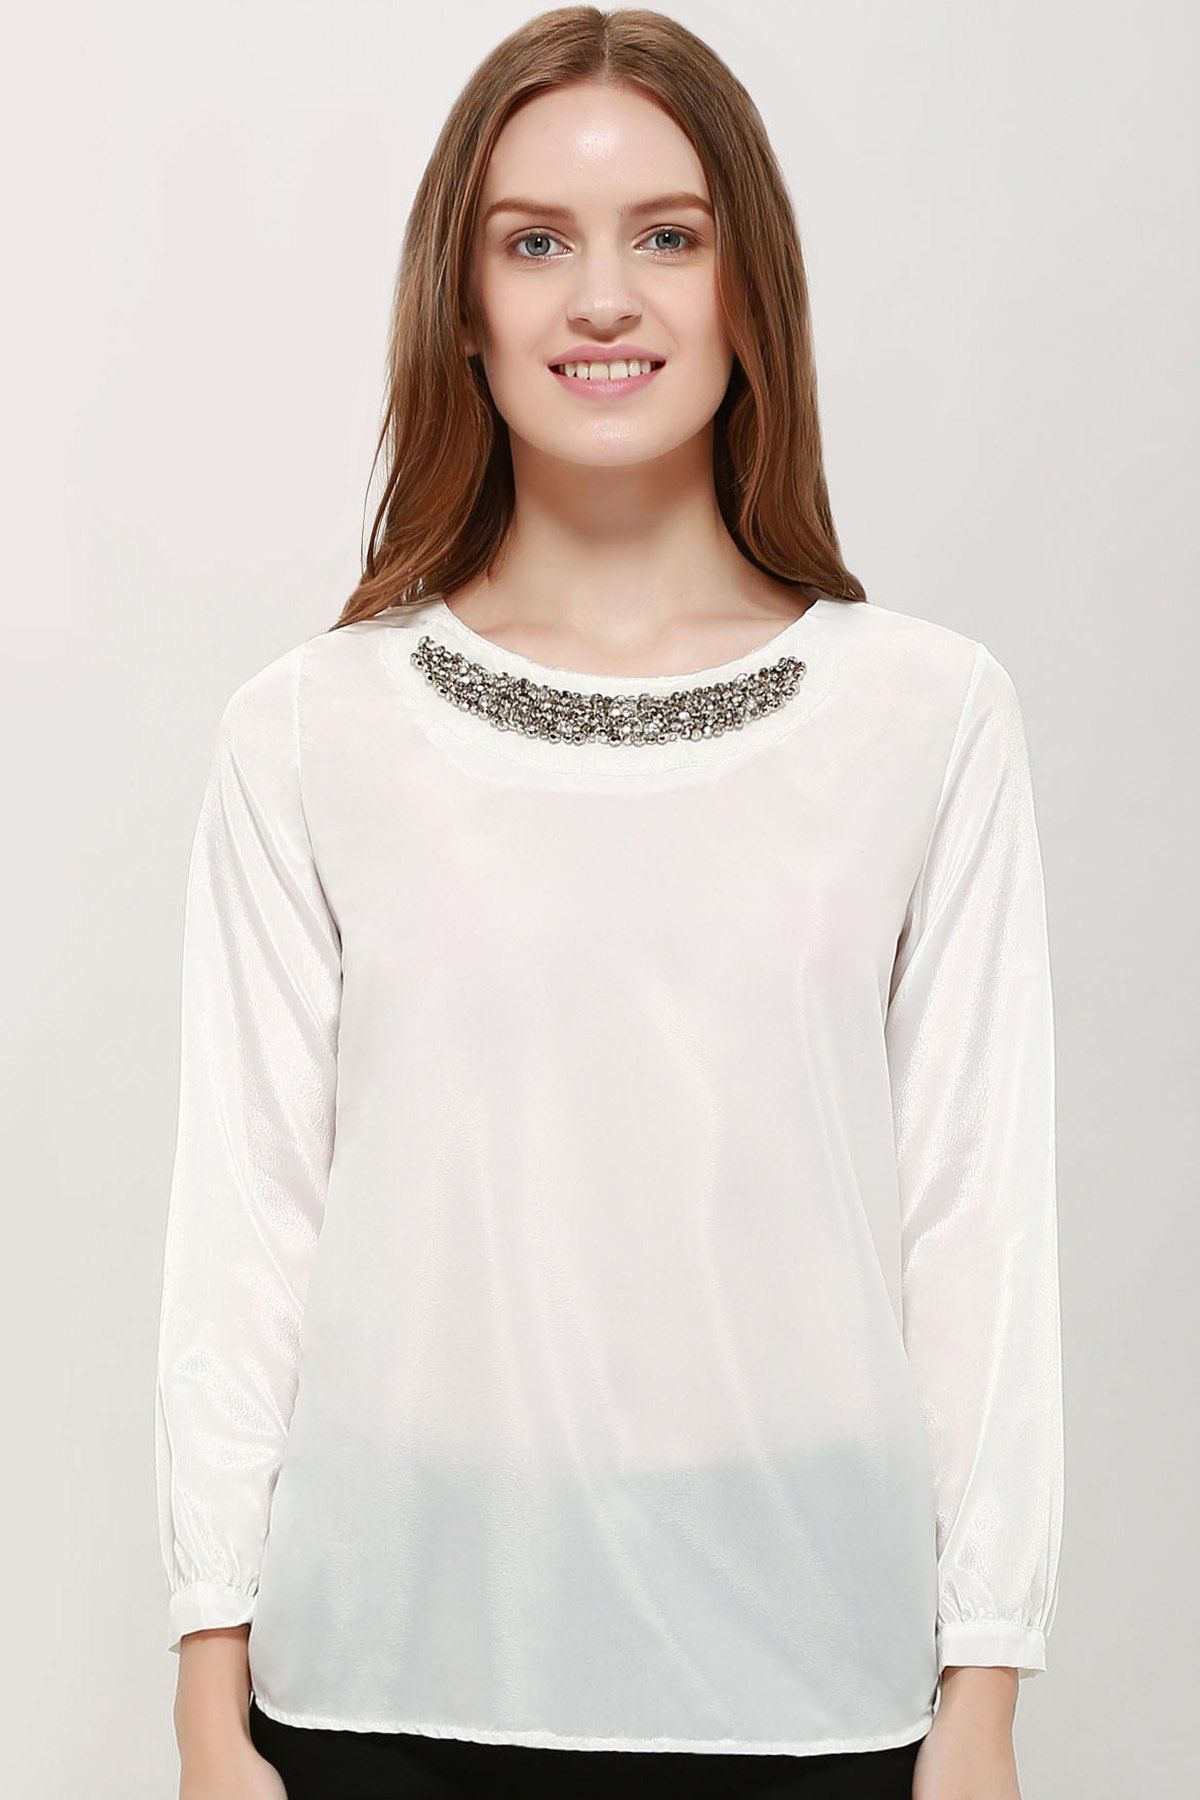 Shop Refreshing Scoop Neck Rhinestone Embellished Long Sleeves Slimming White Dacron Women's Blouse  